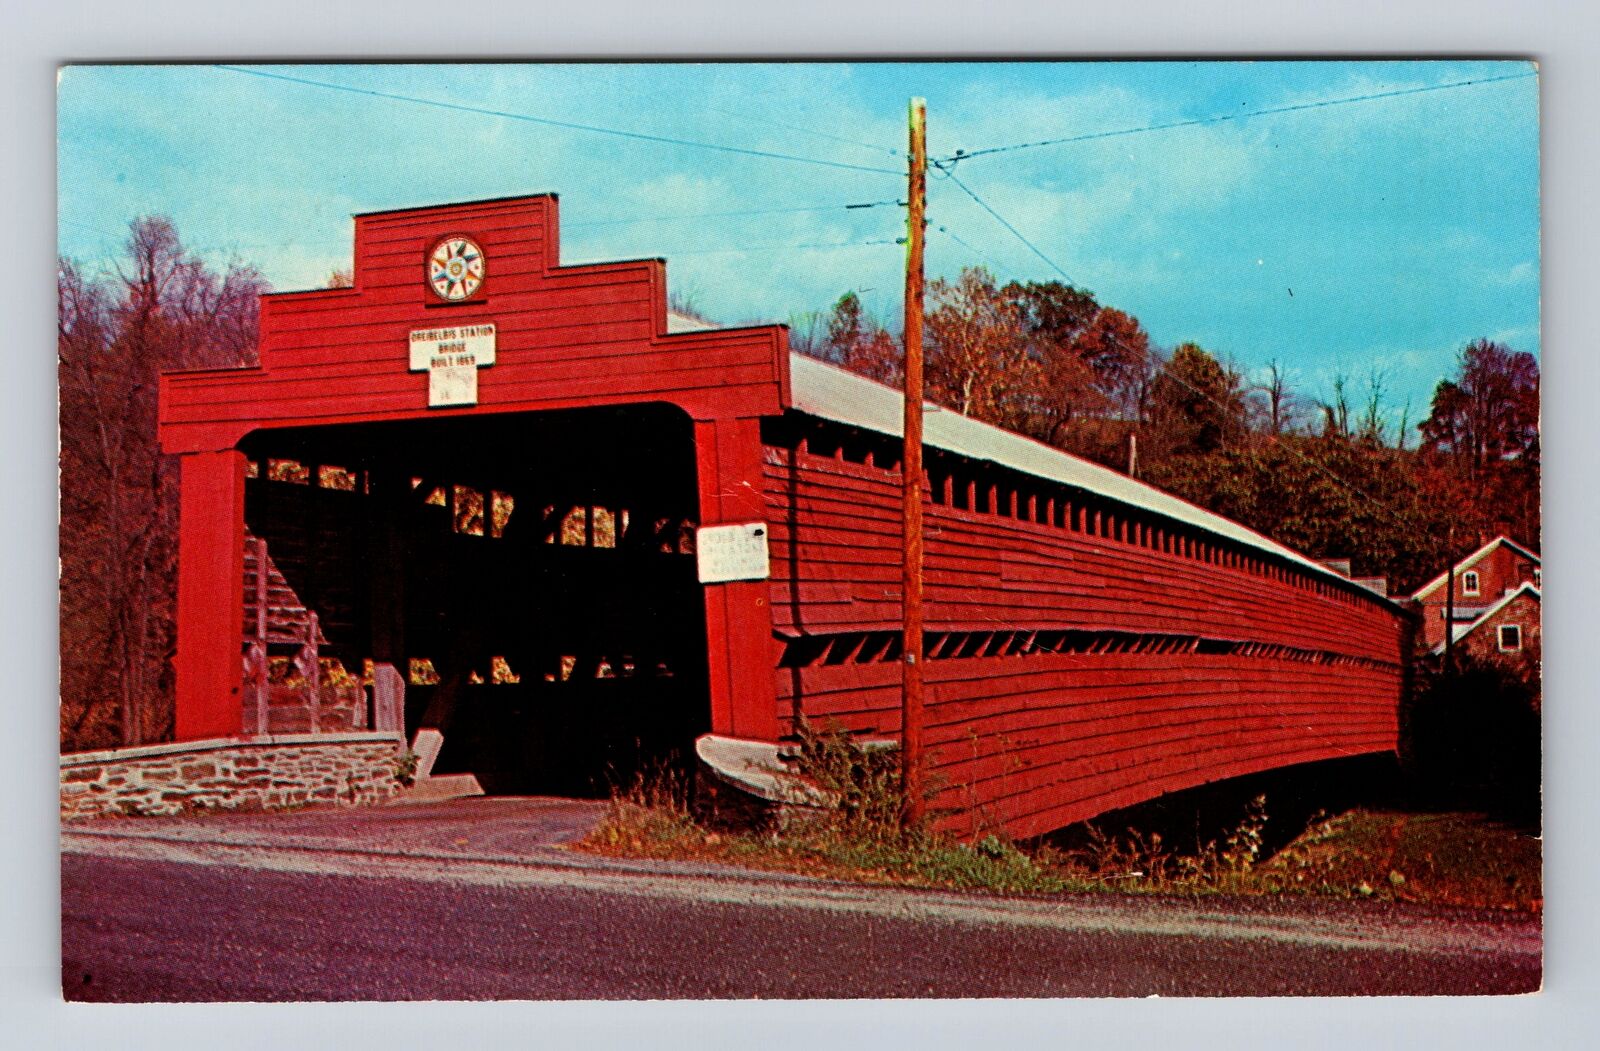 Dreibelbis Station PA-Pennsylvania, Covered Bridge, Greetings Vintage Postcard